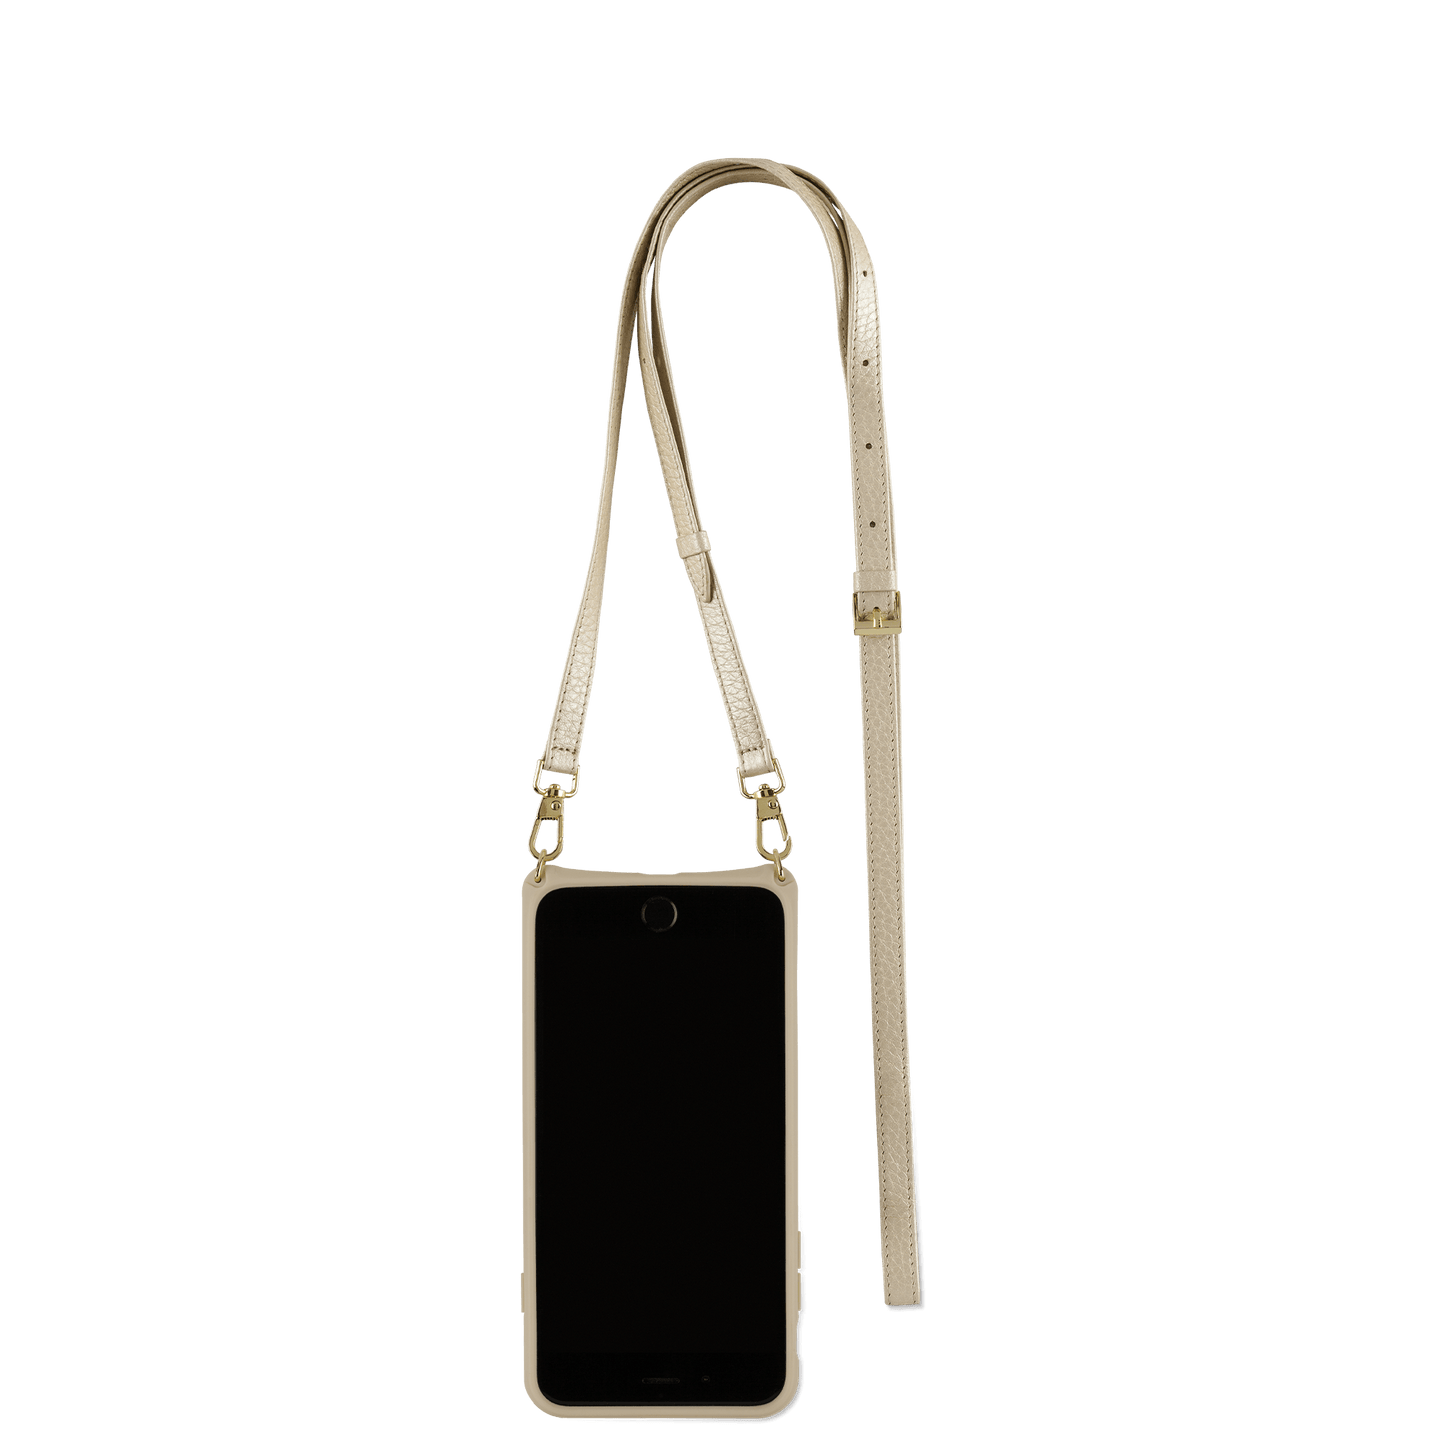 iPhone 8 Plus Durable Chain Sleeve